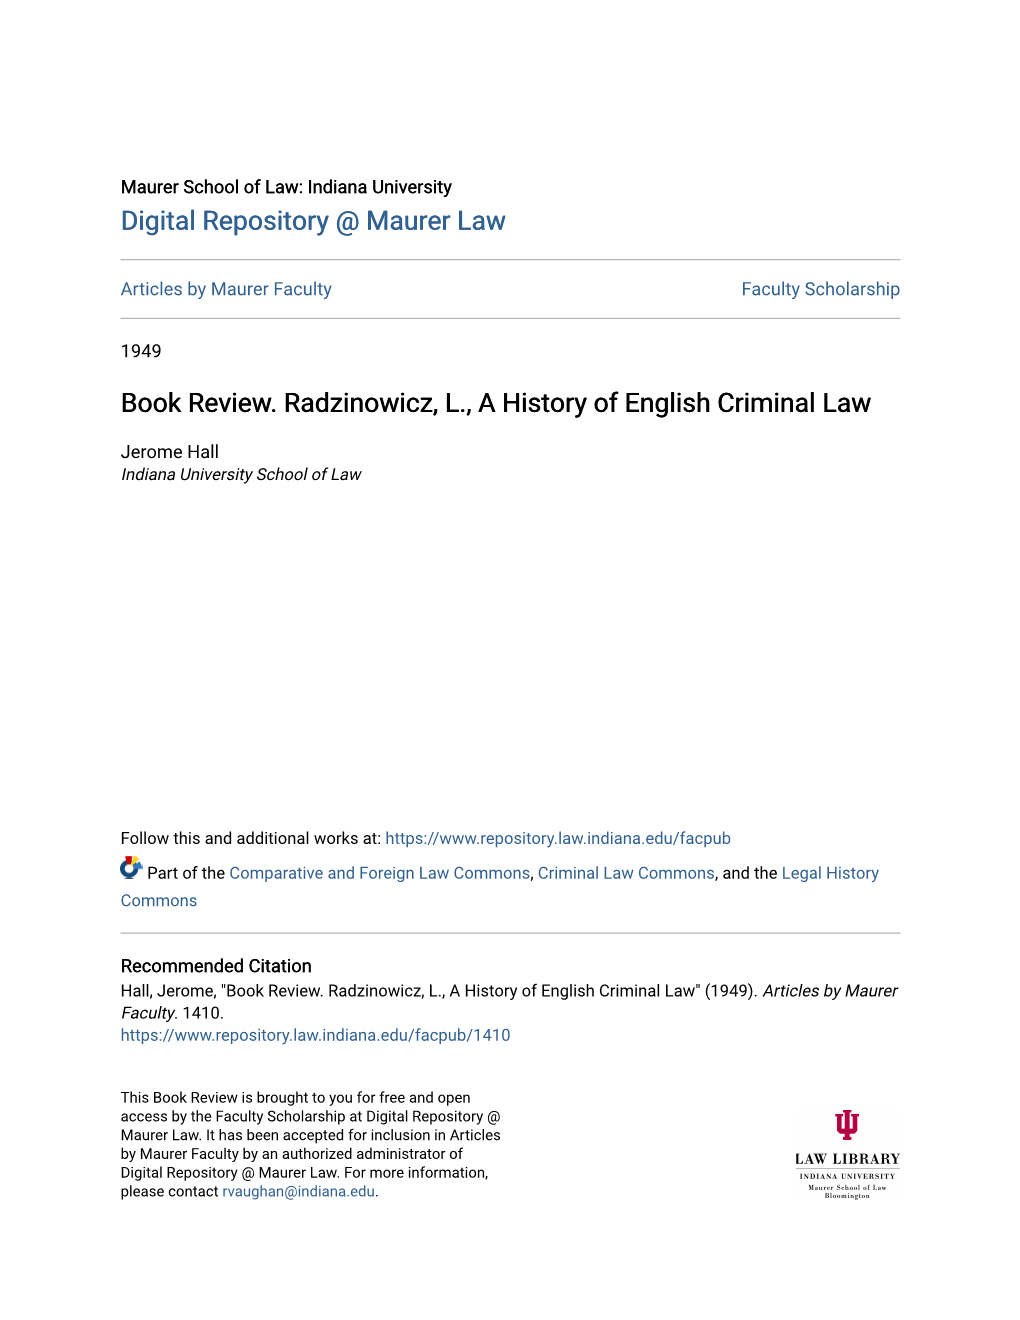 Book Review. Radzinowicz, L., a History of English Criminal Law